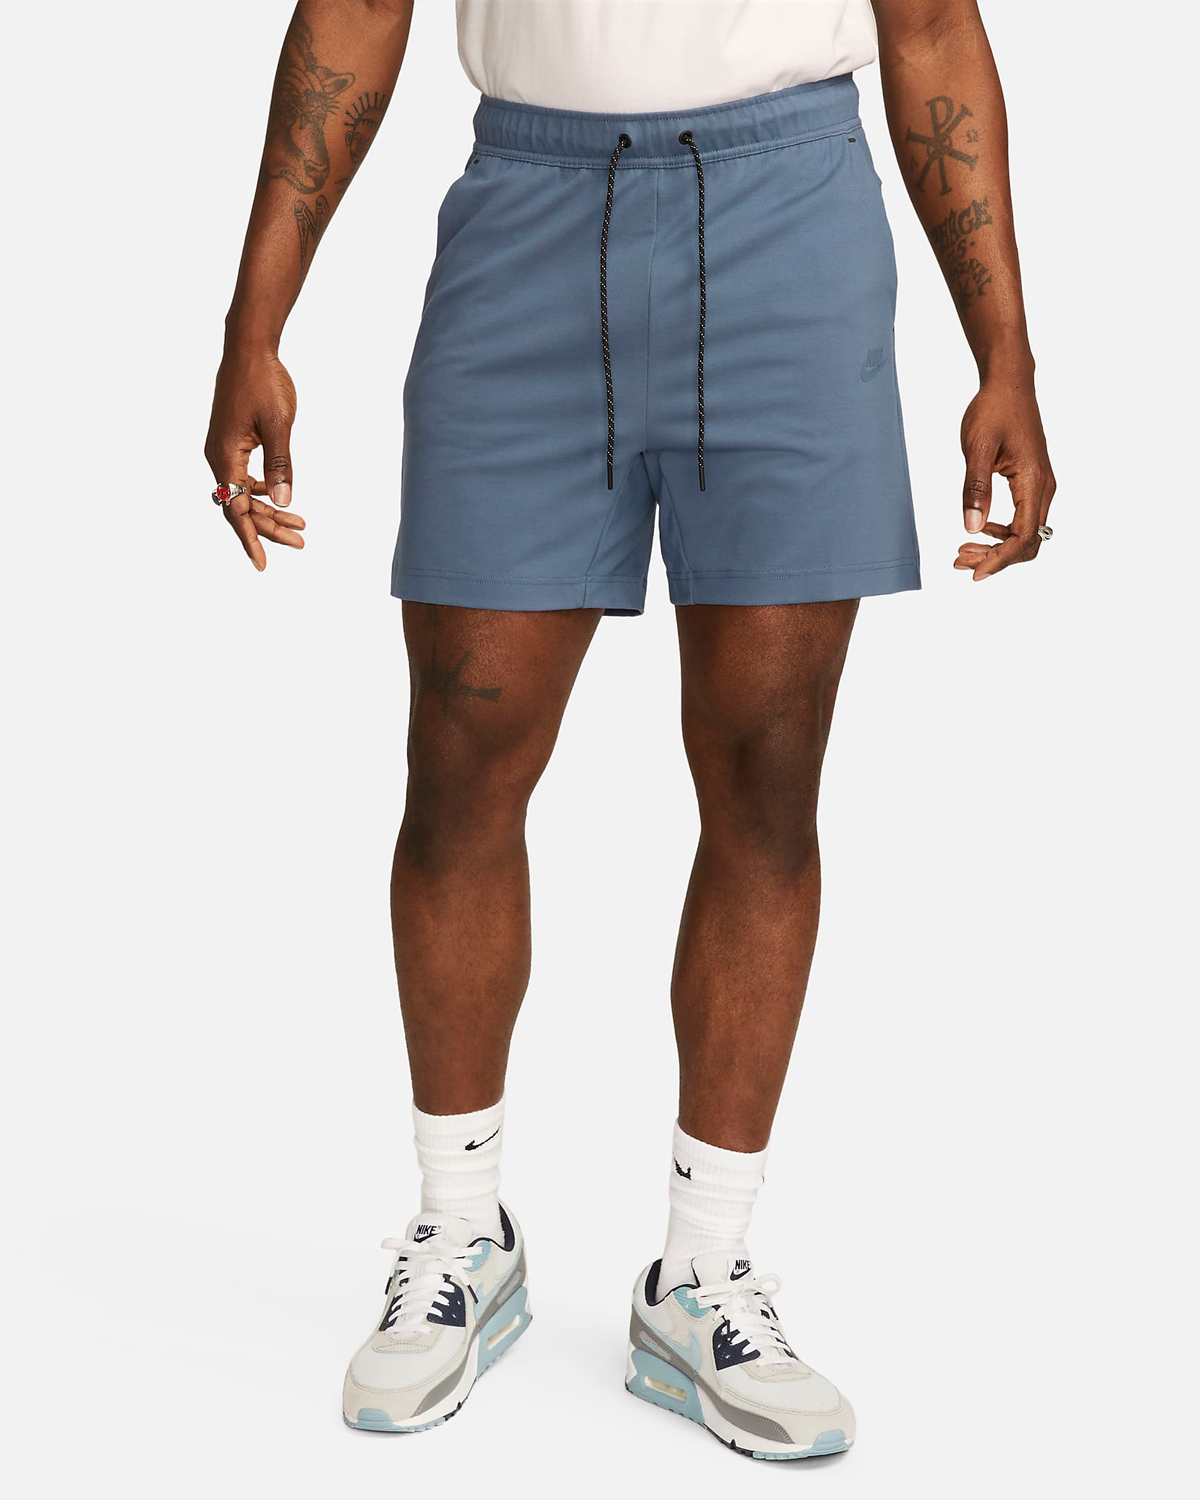 Nike-Tech-Fleece-Lightweight-Shorts-Diffused-Blue